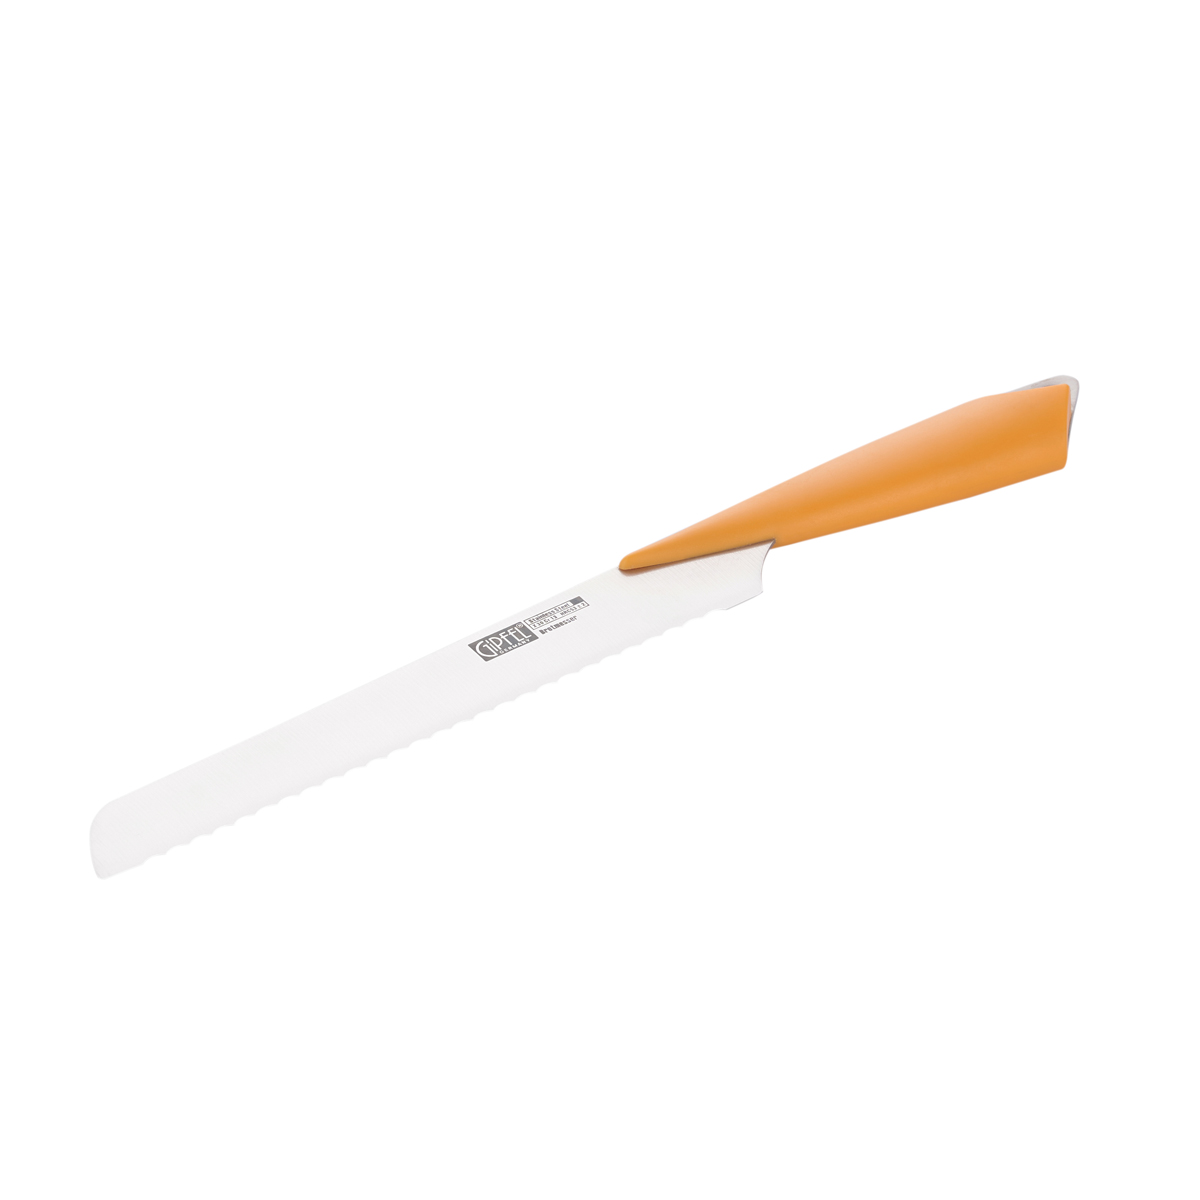 Хлебный нож Gipfel Allos 6866, цвет желтый